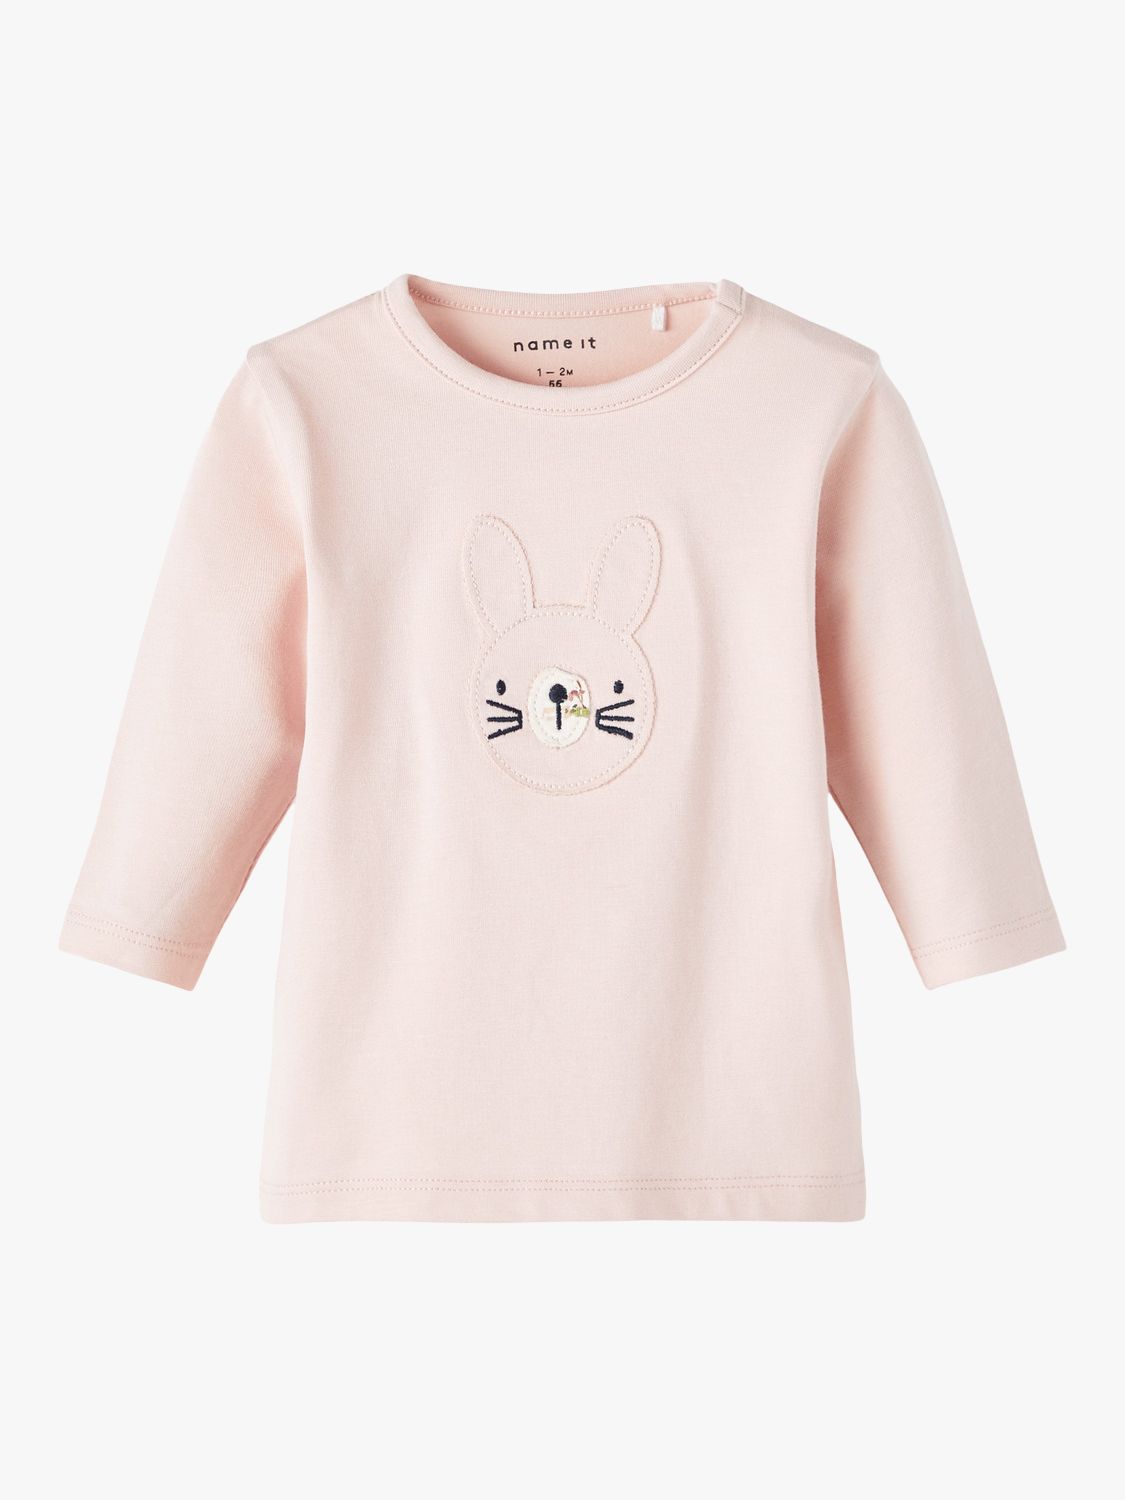 NAME IT Baby Bunny Long Sleeve T-Shirt, Rose Smoke